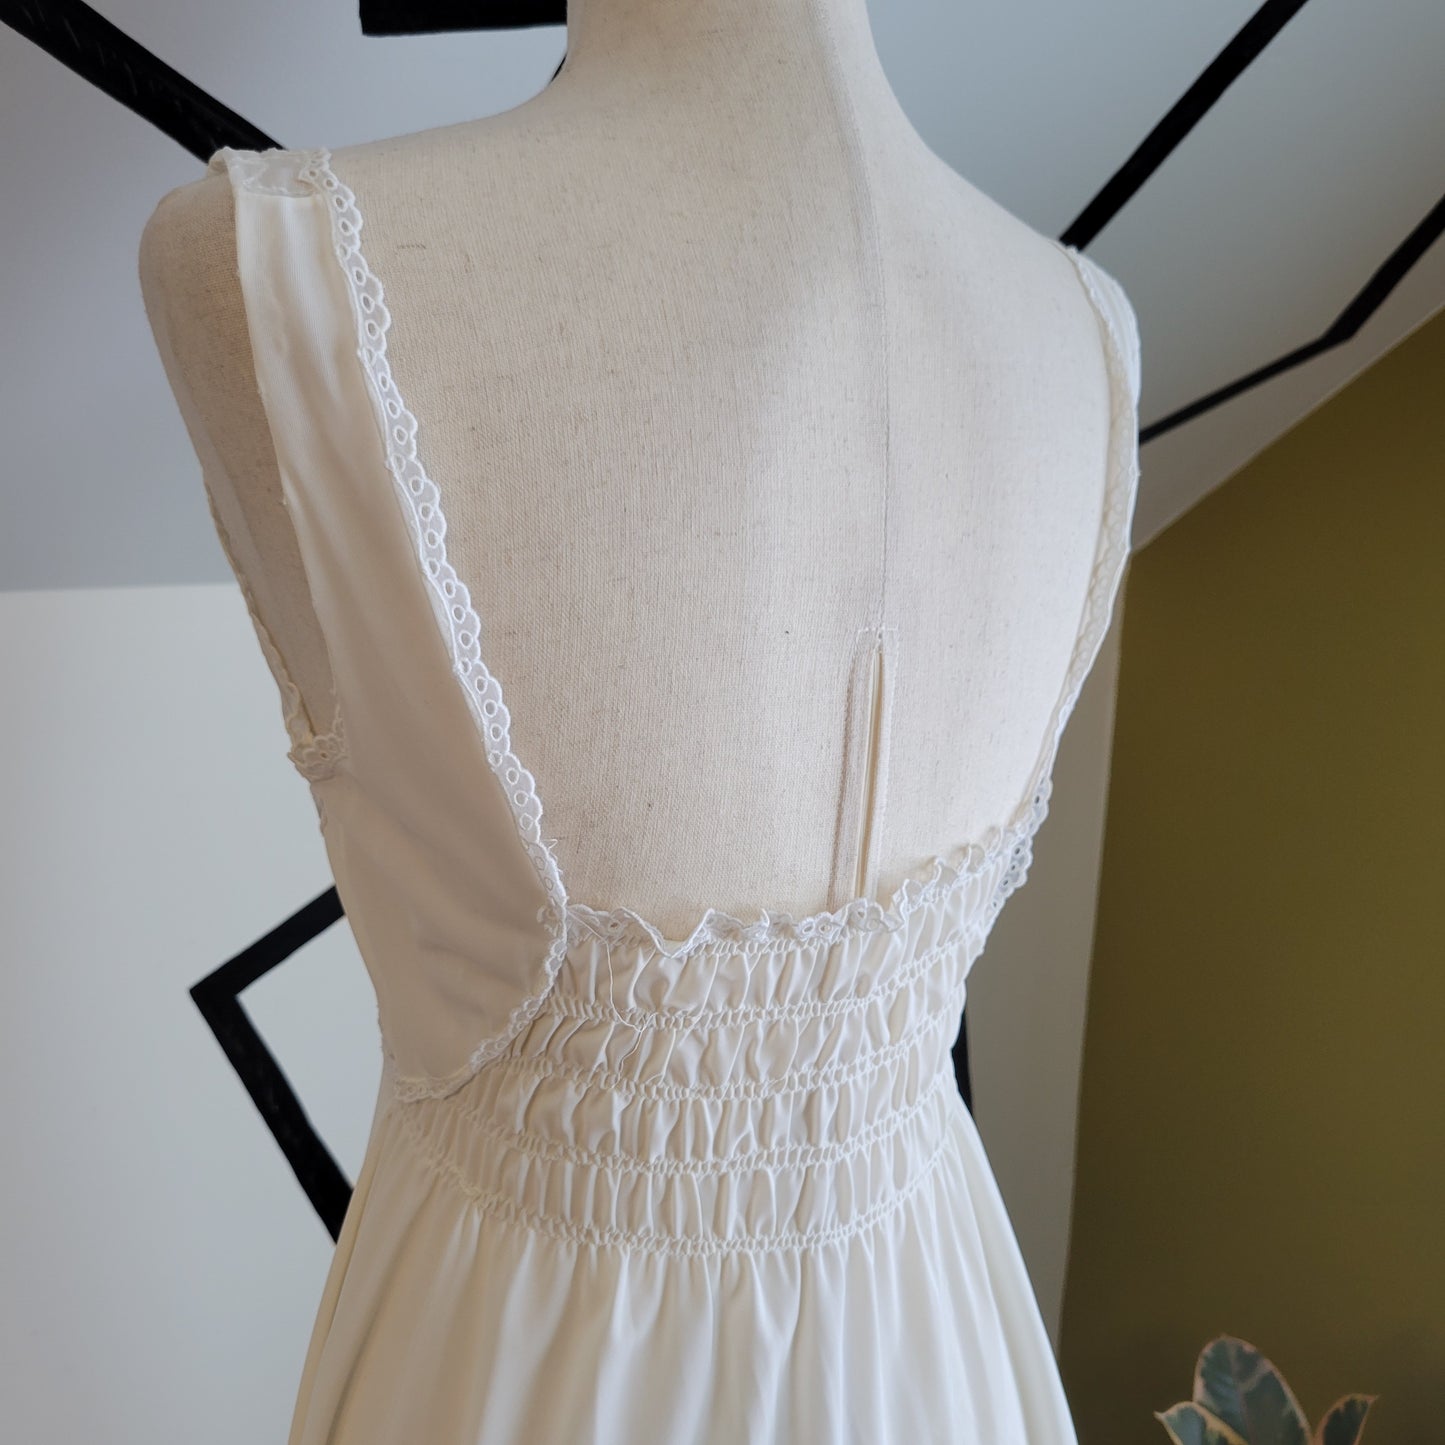 Italian Confezioni SEBA Vintage Ivory Lace Night Gown - XS